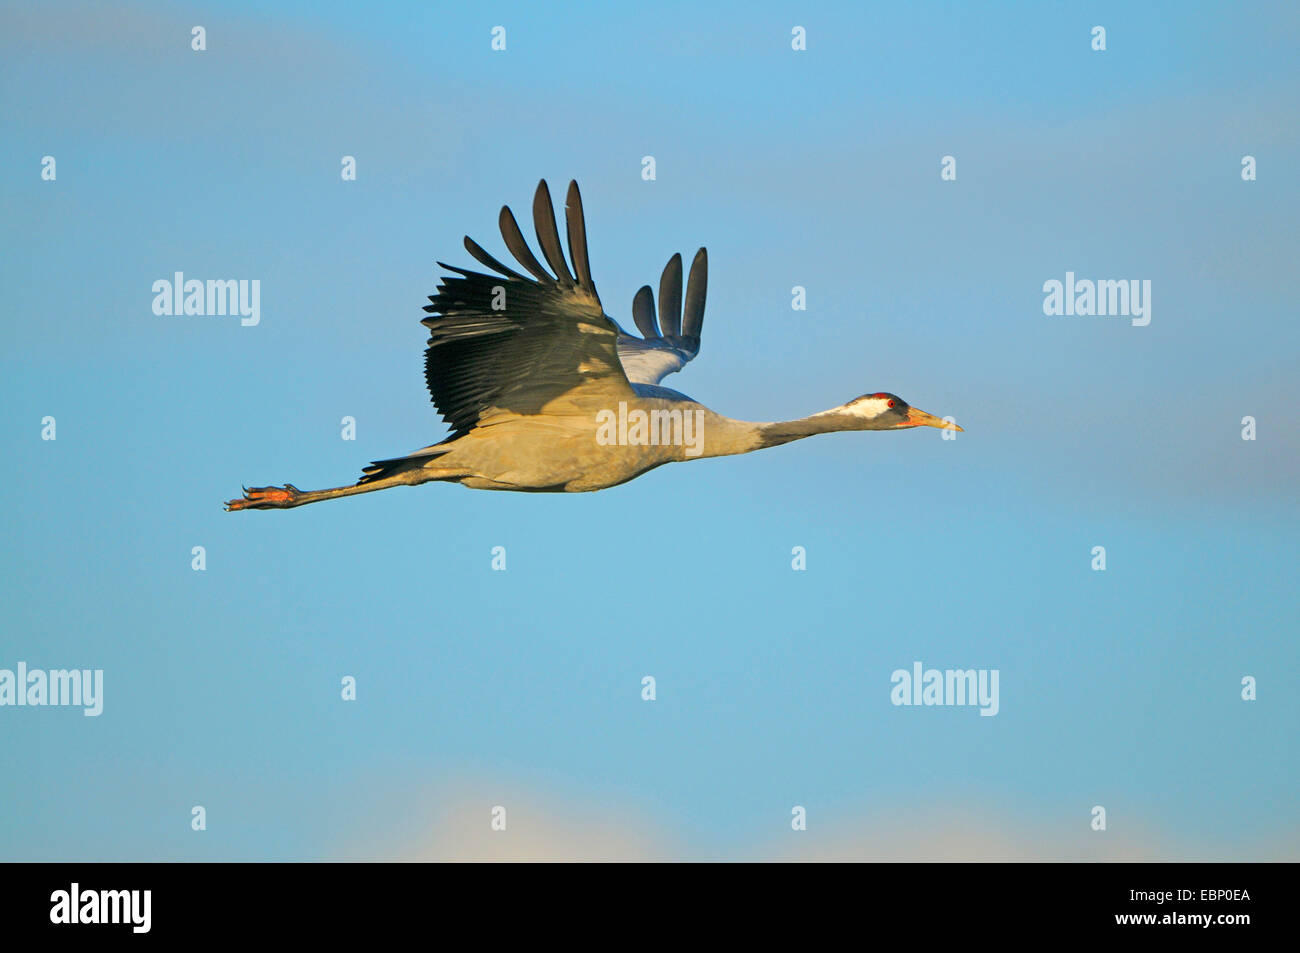 Common crane, Eurasian Crane (Grus grus), adult in flight in morning light, Germany, Mecklenburg-Western Pomerania, Western Pomerania Lagoon Area National Park Stock Photo